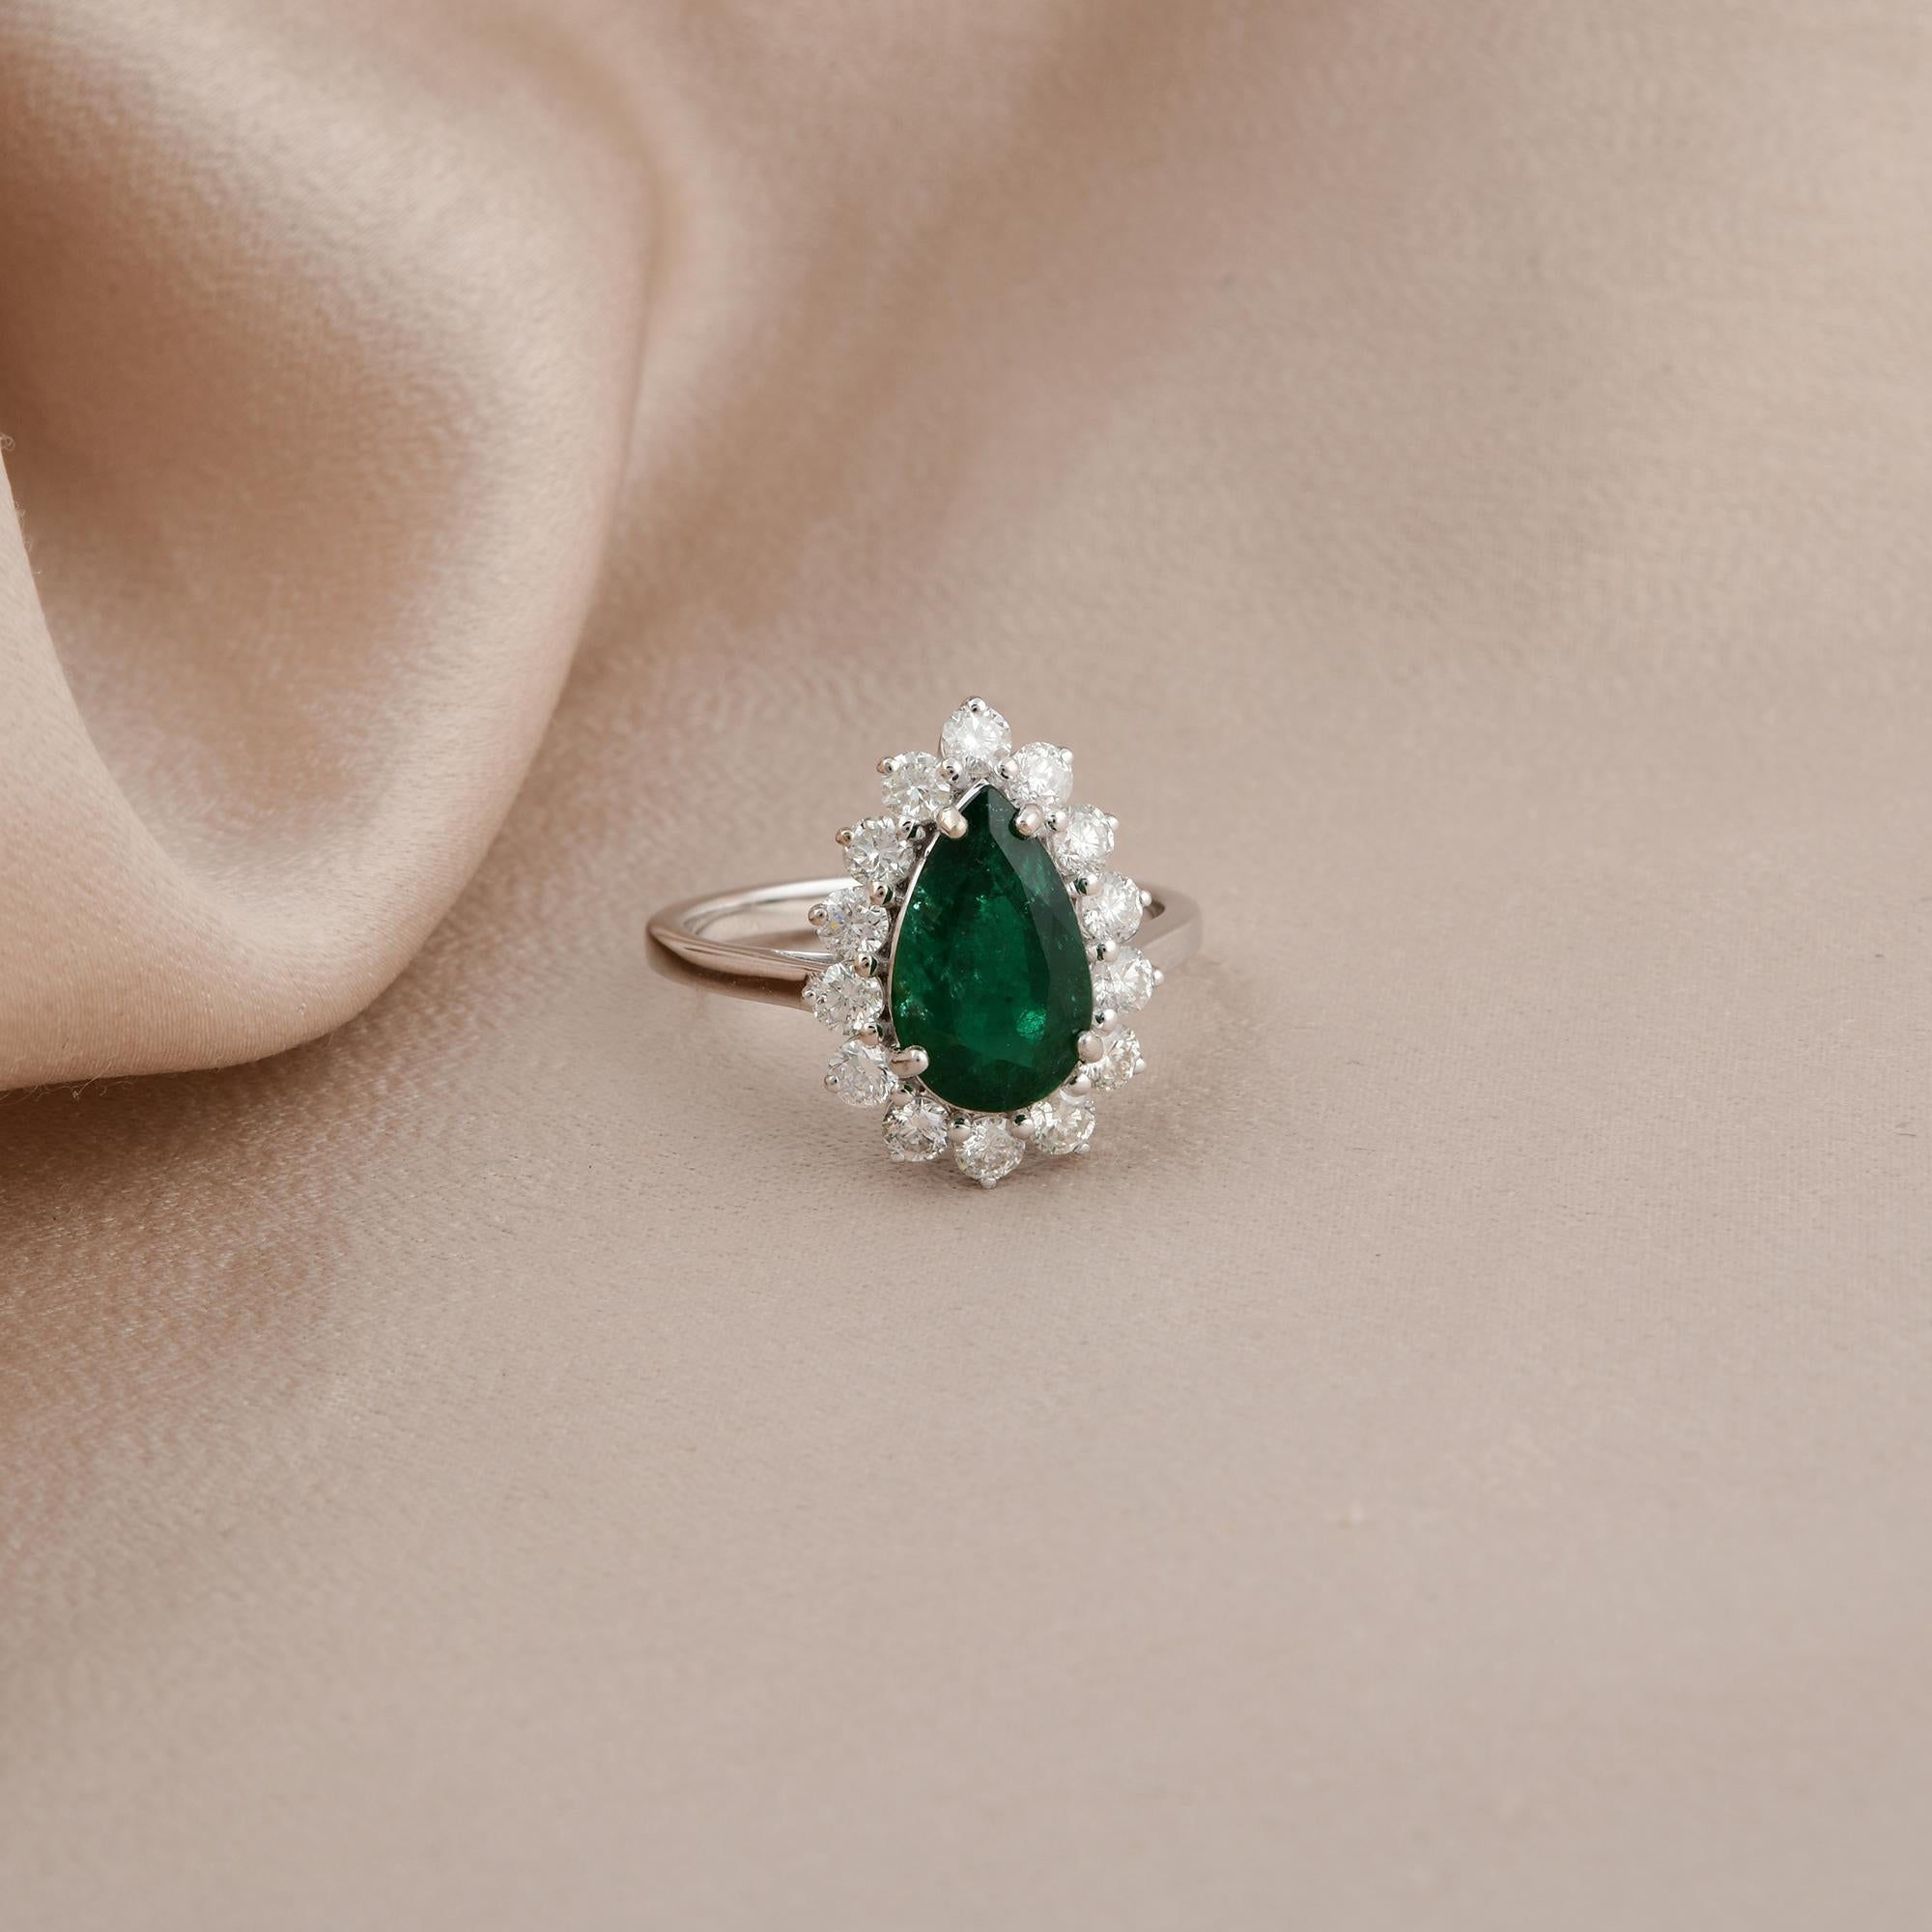 Pear Cut Pear Zambian Emerald Gemstone Cocktail Ring Diamond 18 Karat White Gold Jewelry For Sale